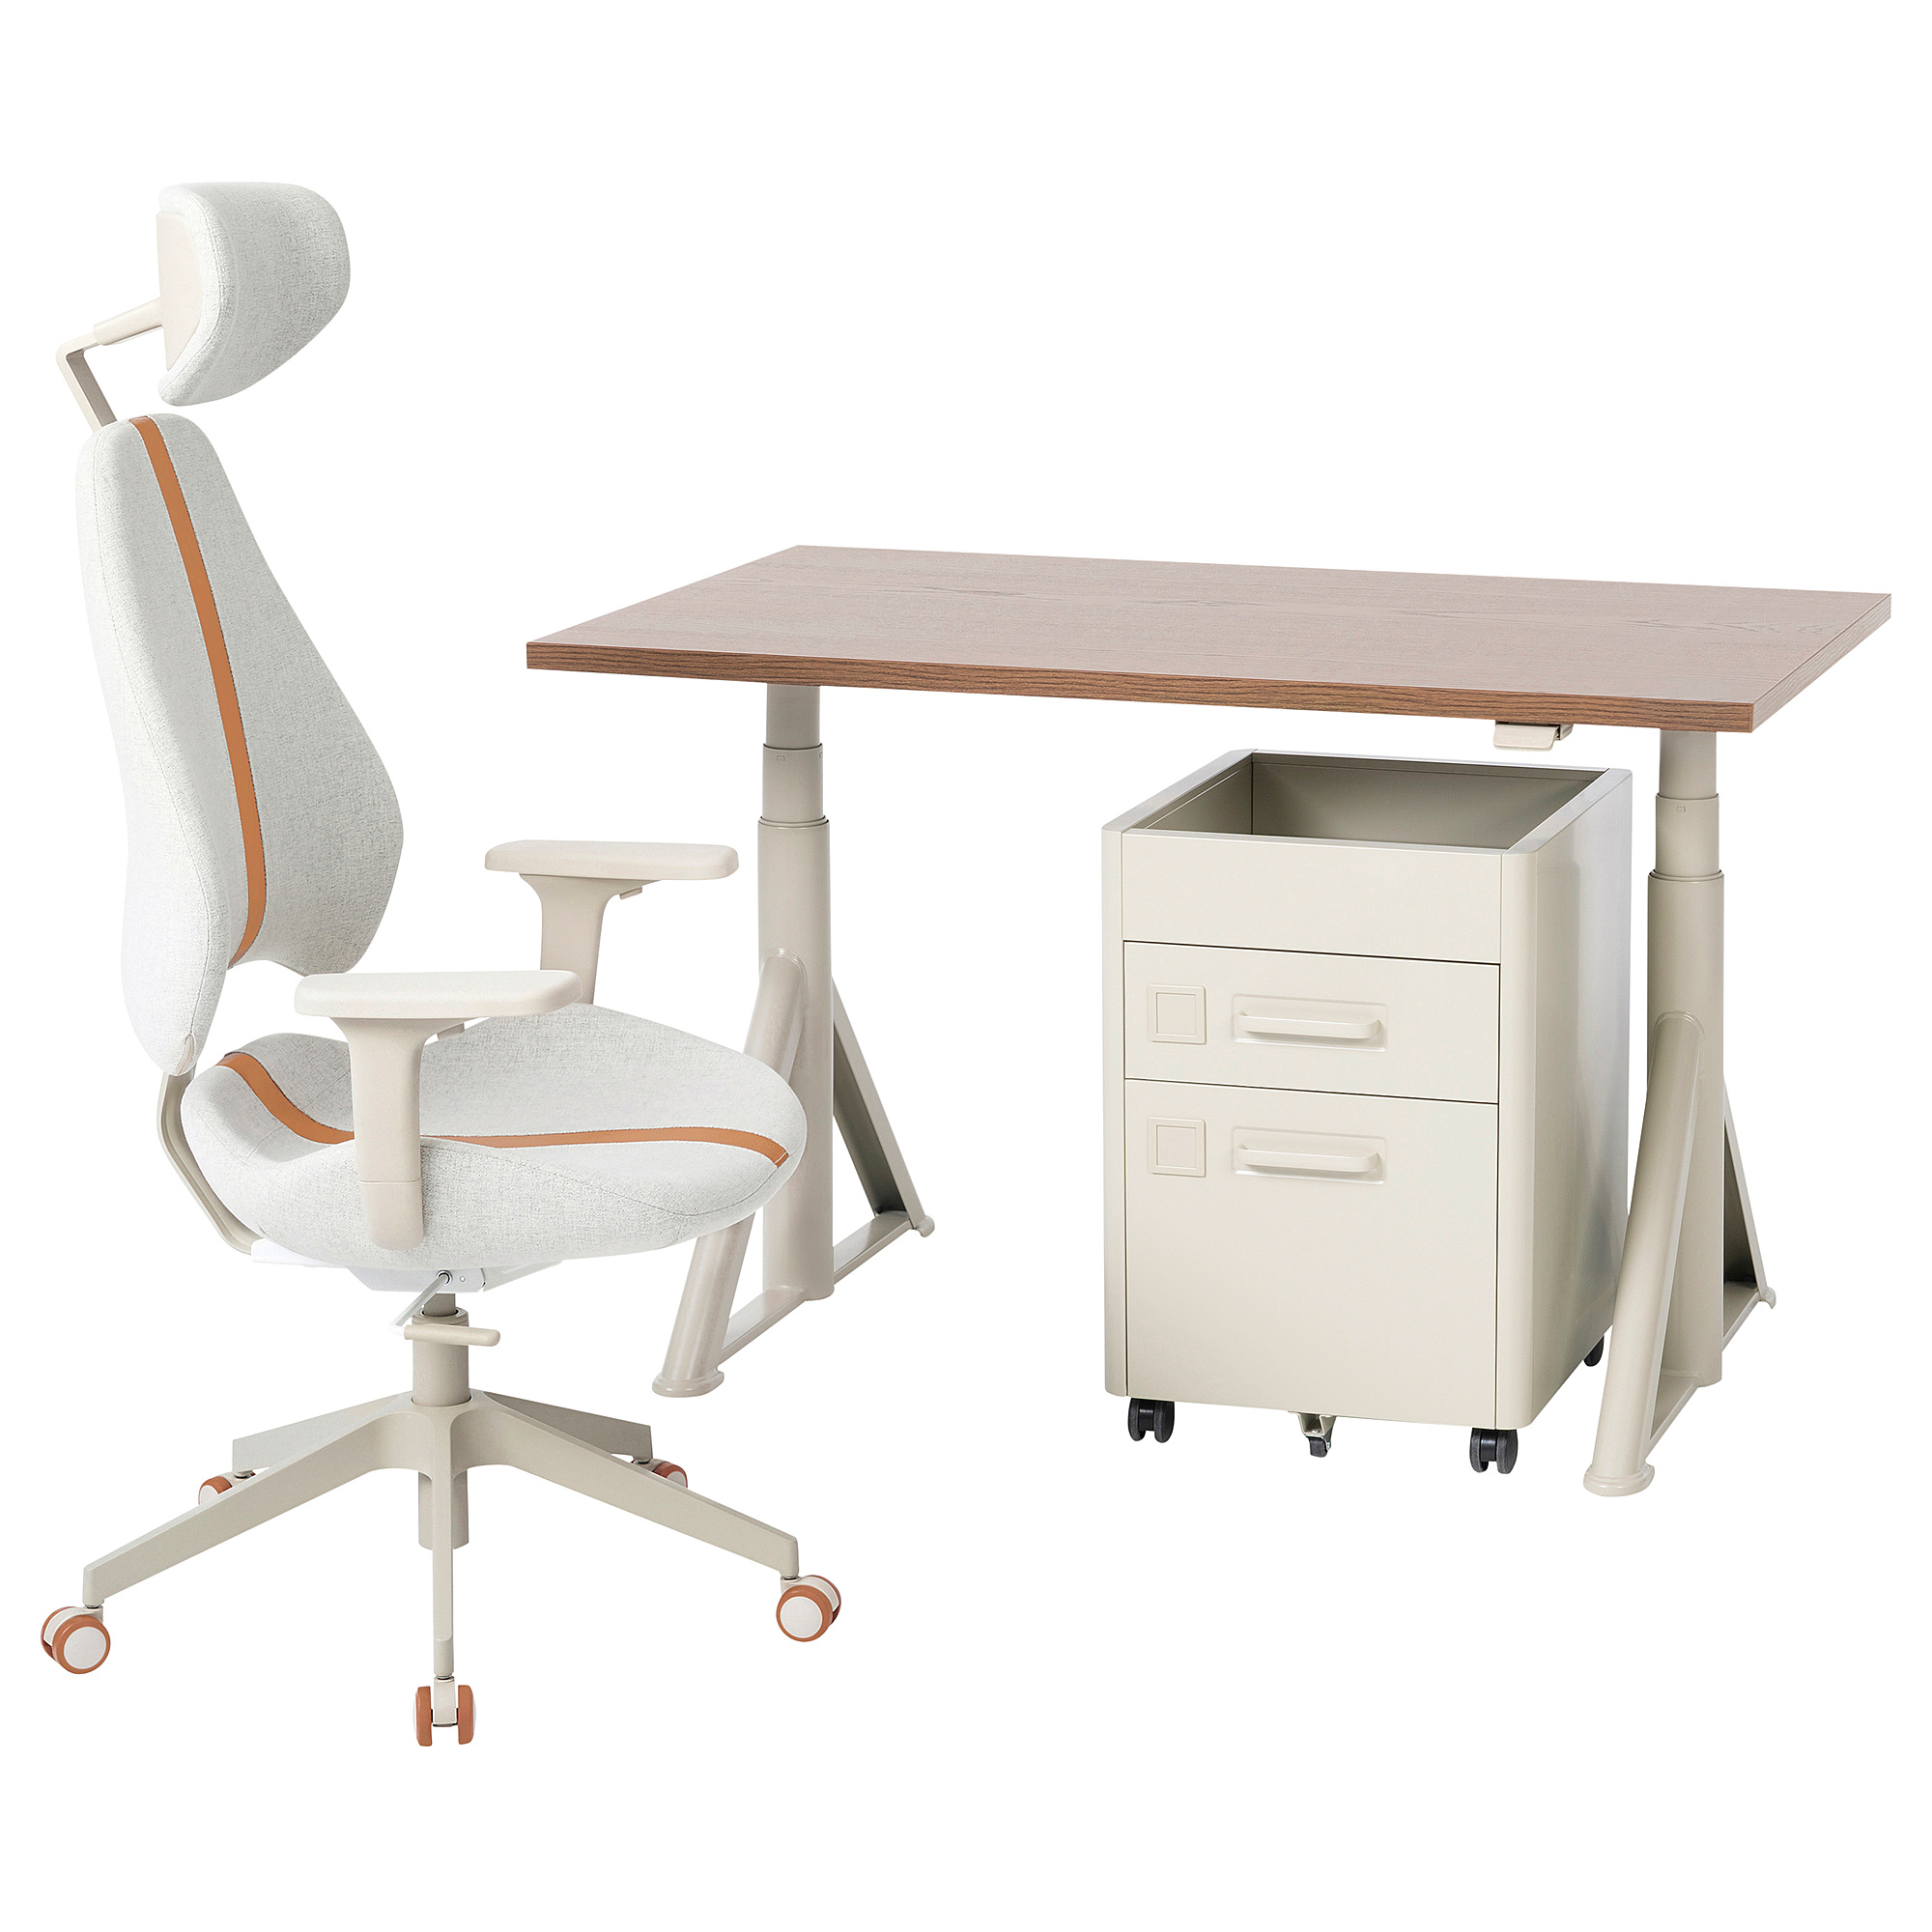 IDÅSEN/GRUPPSPEL desk, chair and drawer unit